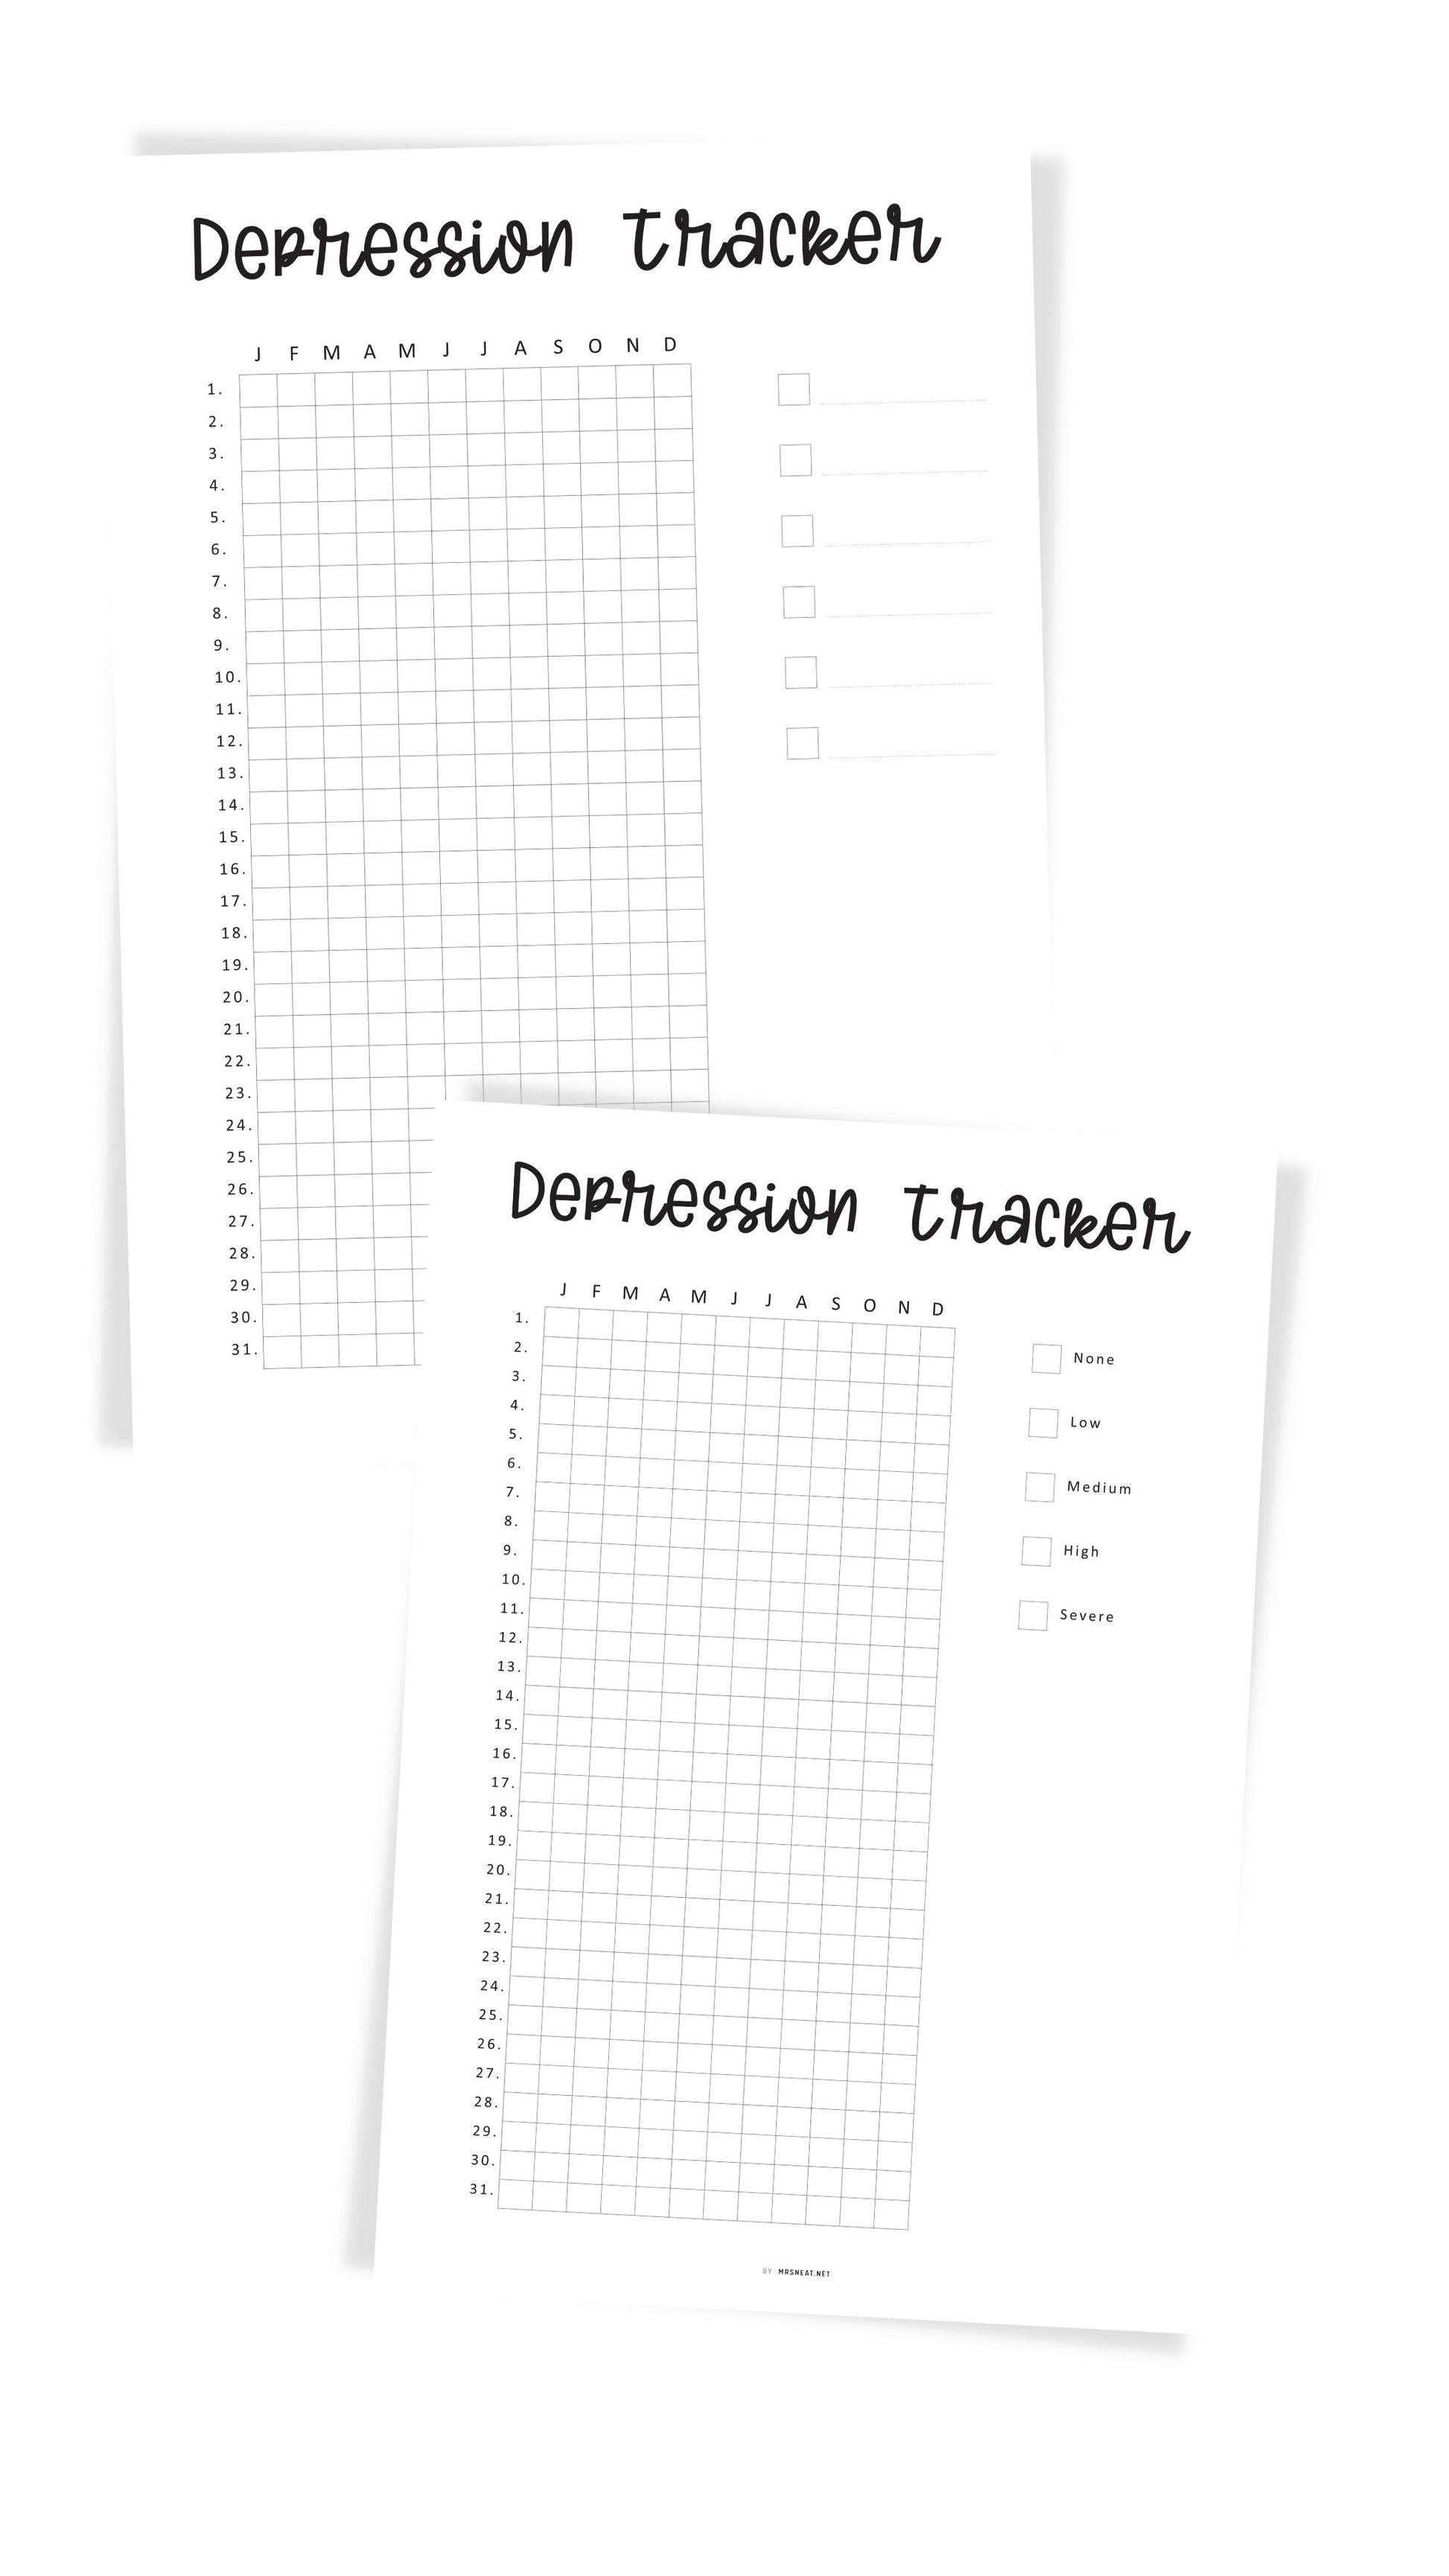 One Year Depression Tracker Printable PDF